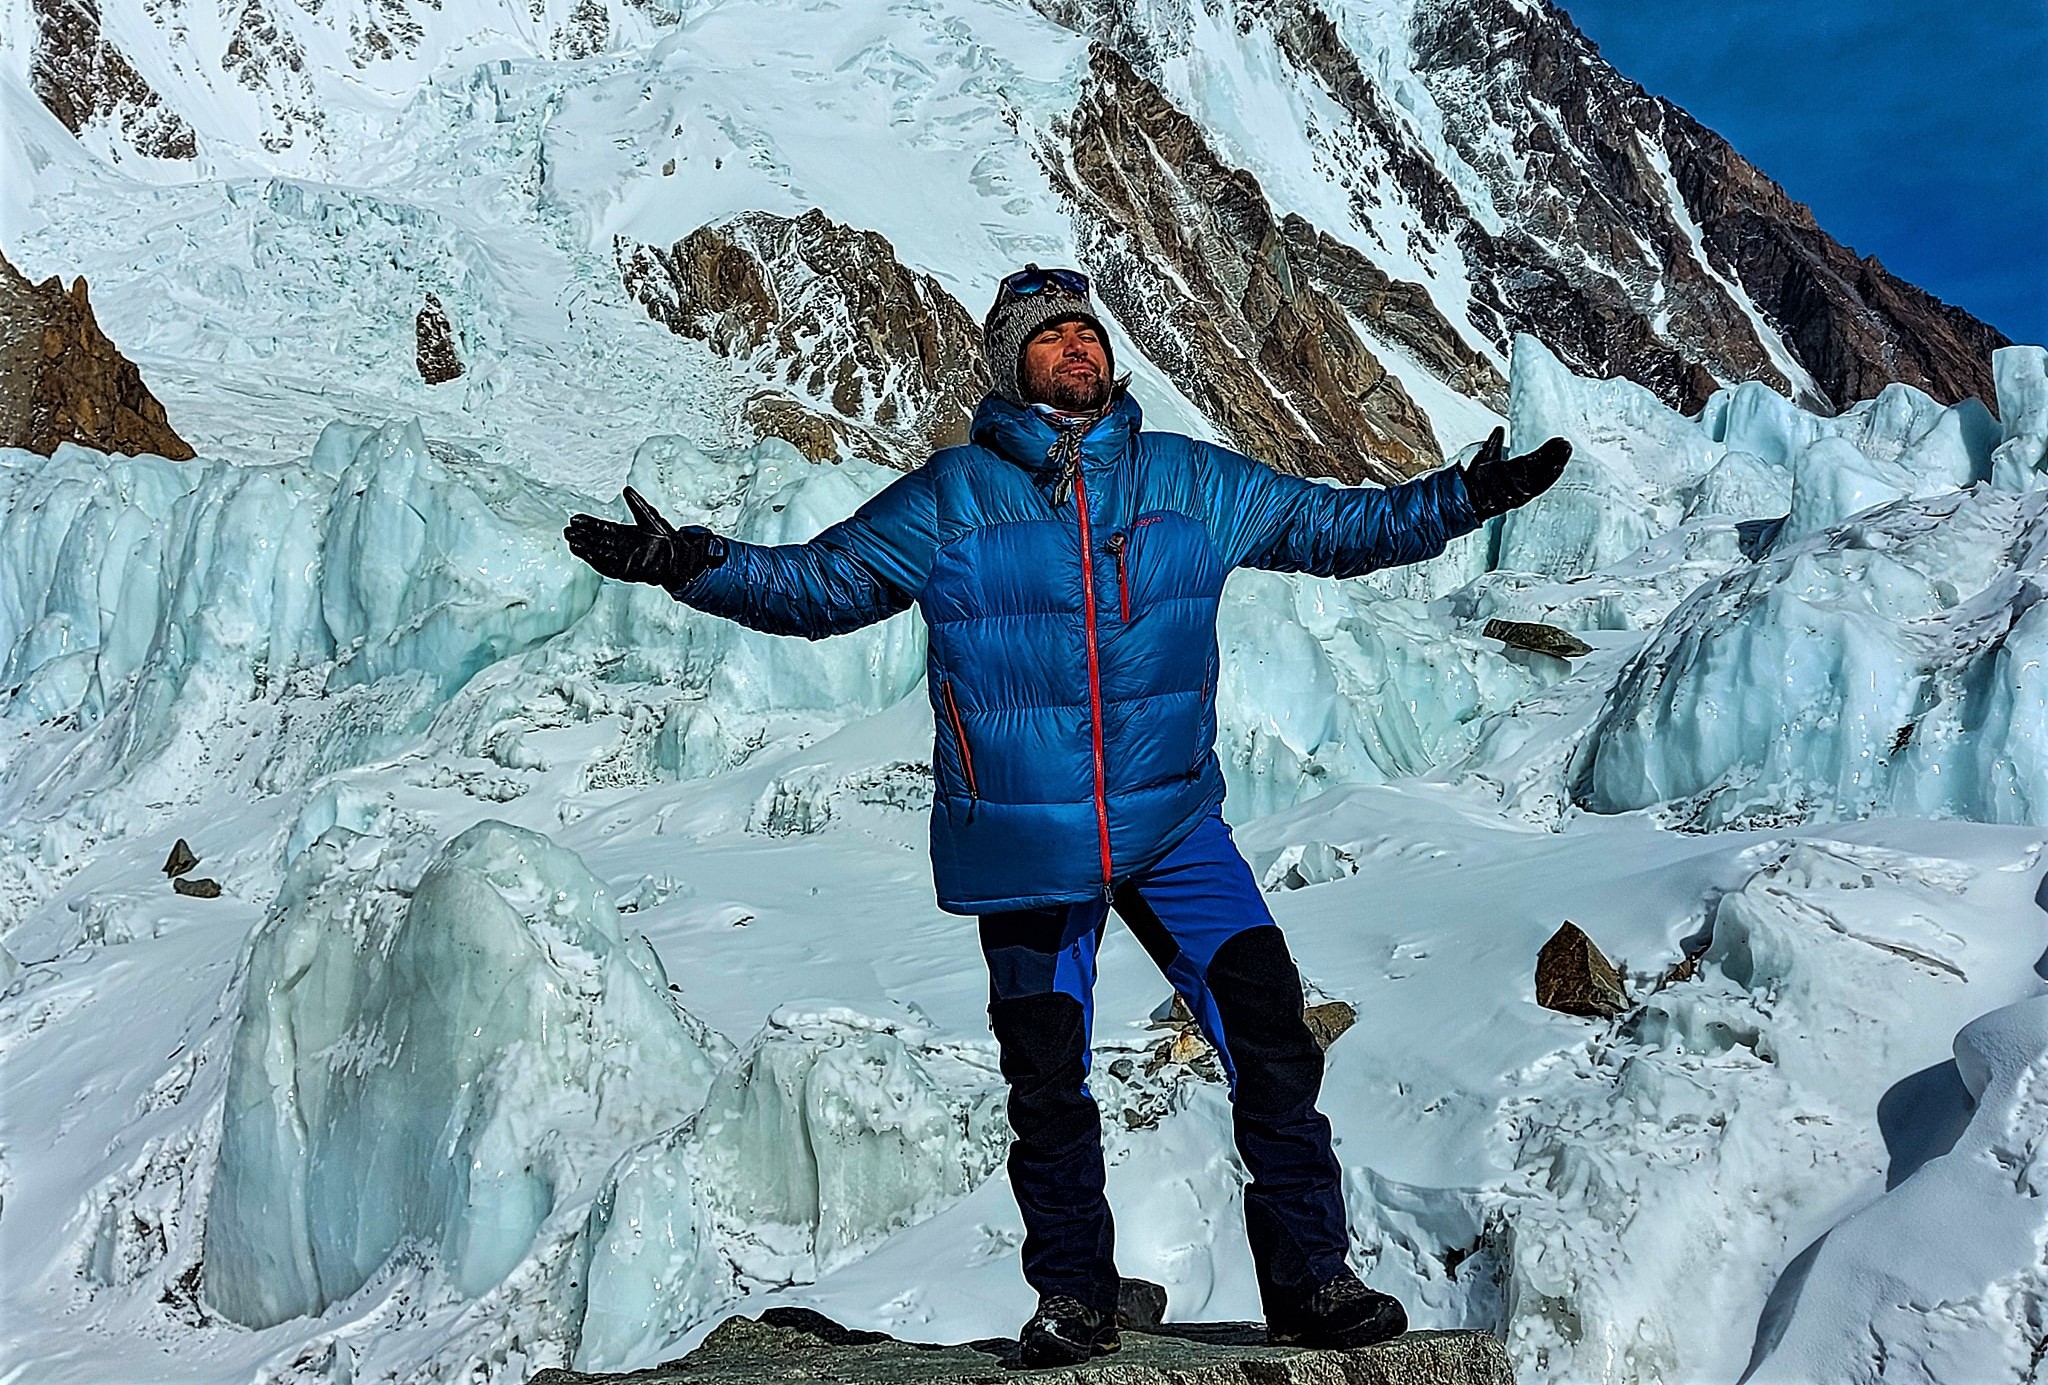 Accidente mortal K2 invernal Atanas Skatov